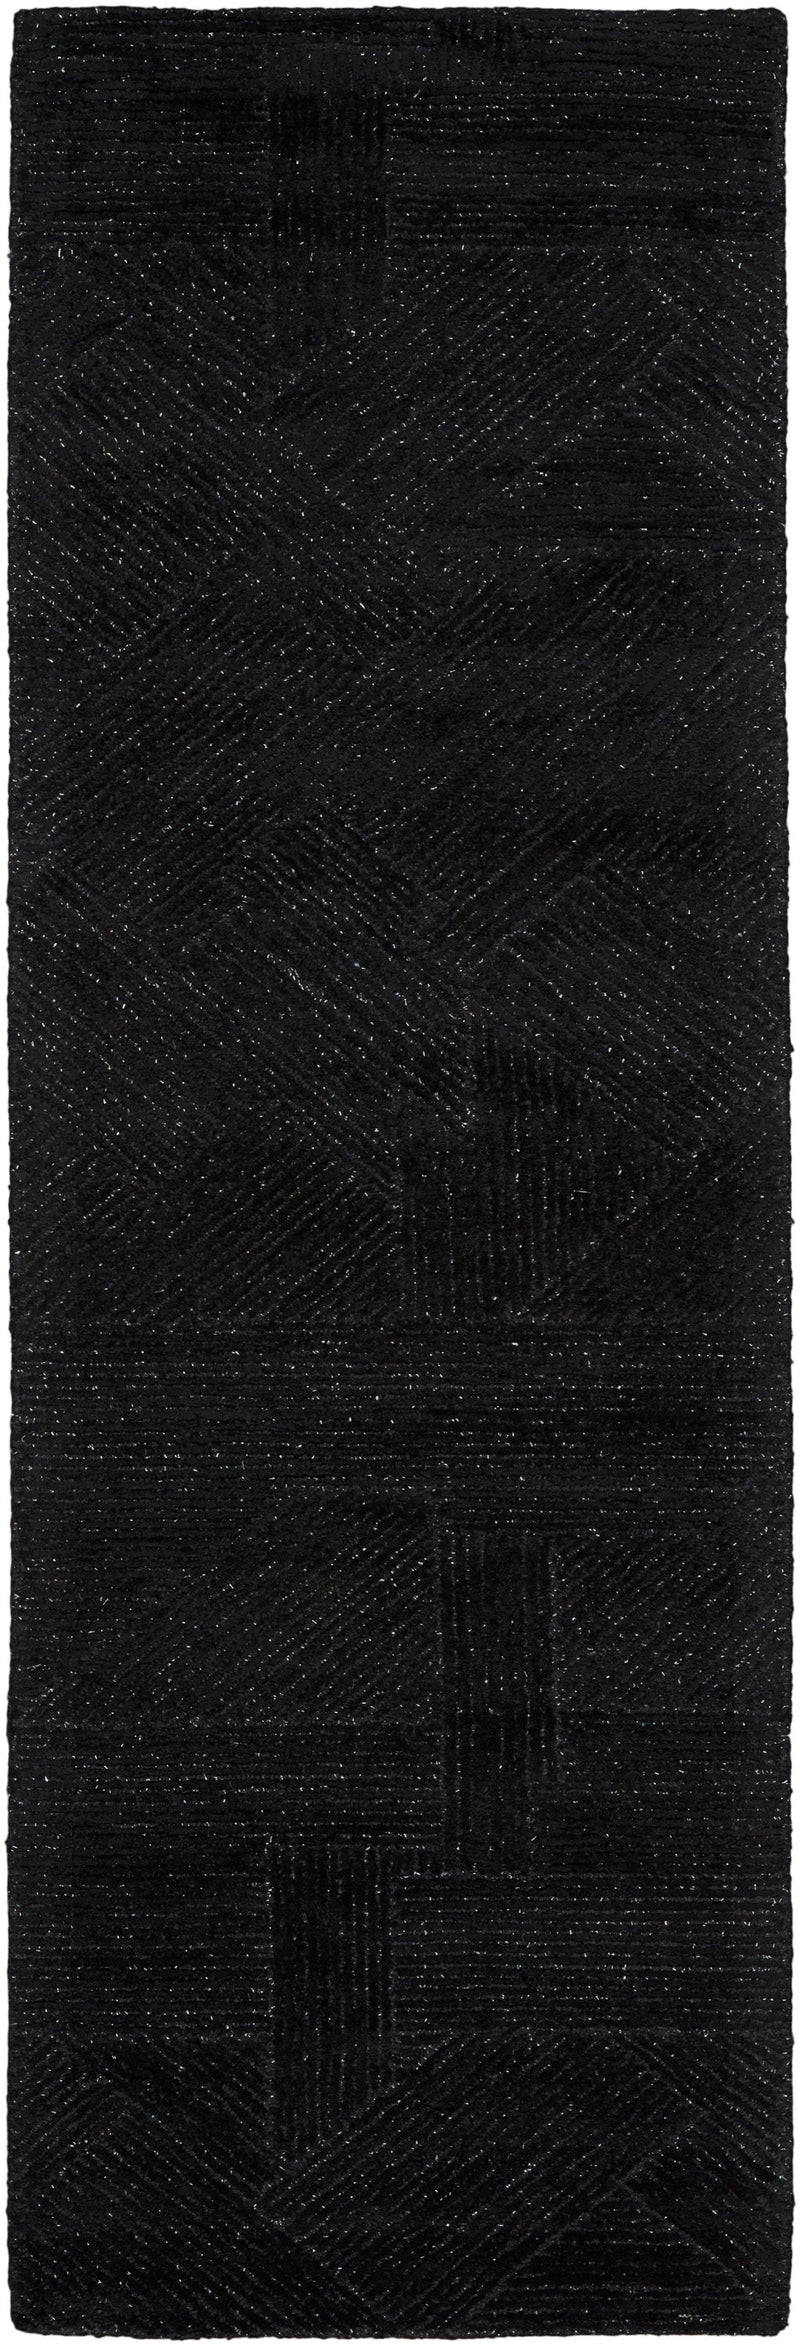 media image for ma30 star handmade black rug by nourison 99446880871 redo 2 27